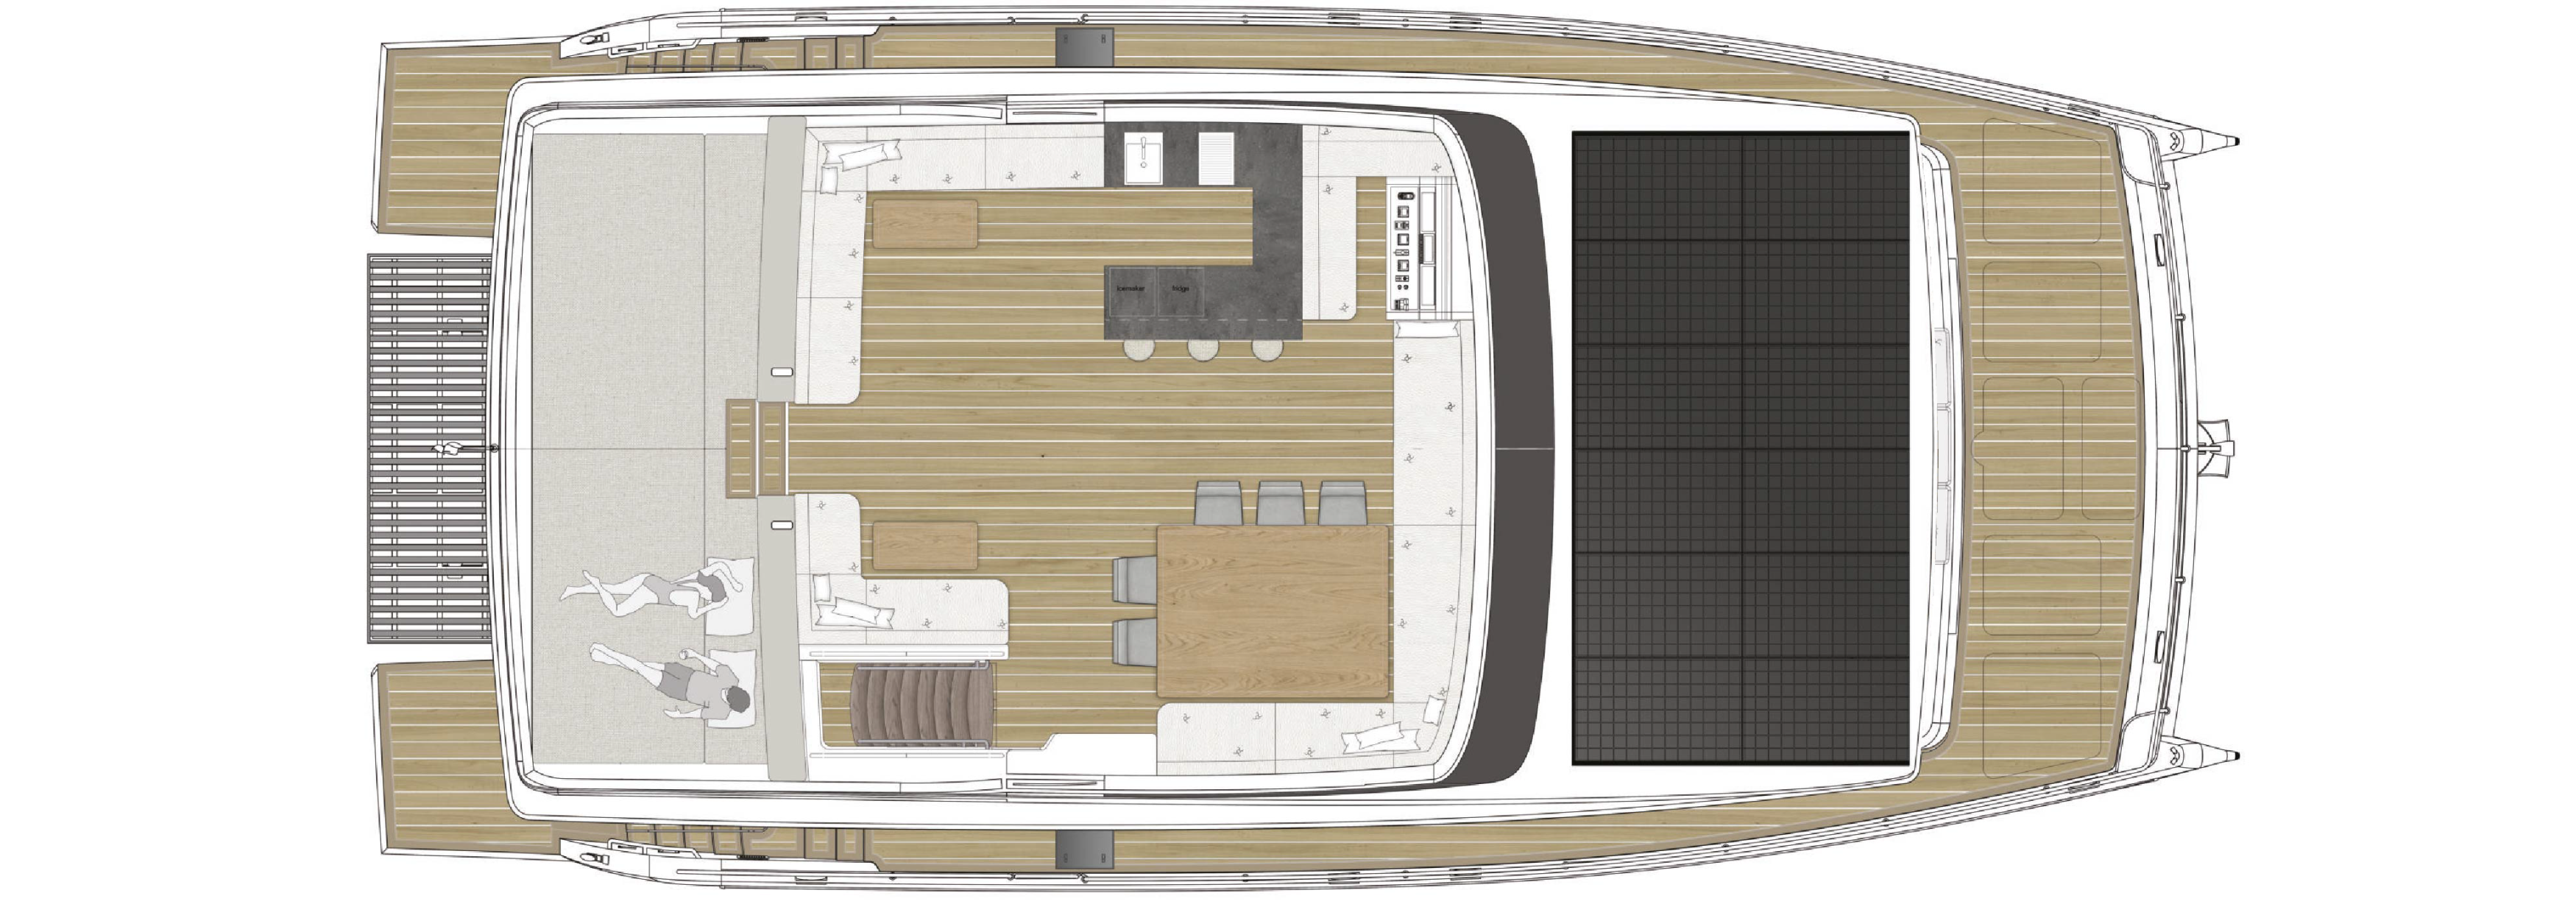 Yacht 3 deck plan